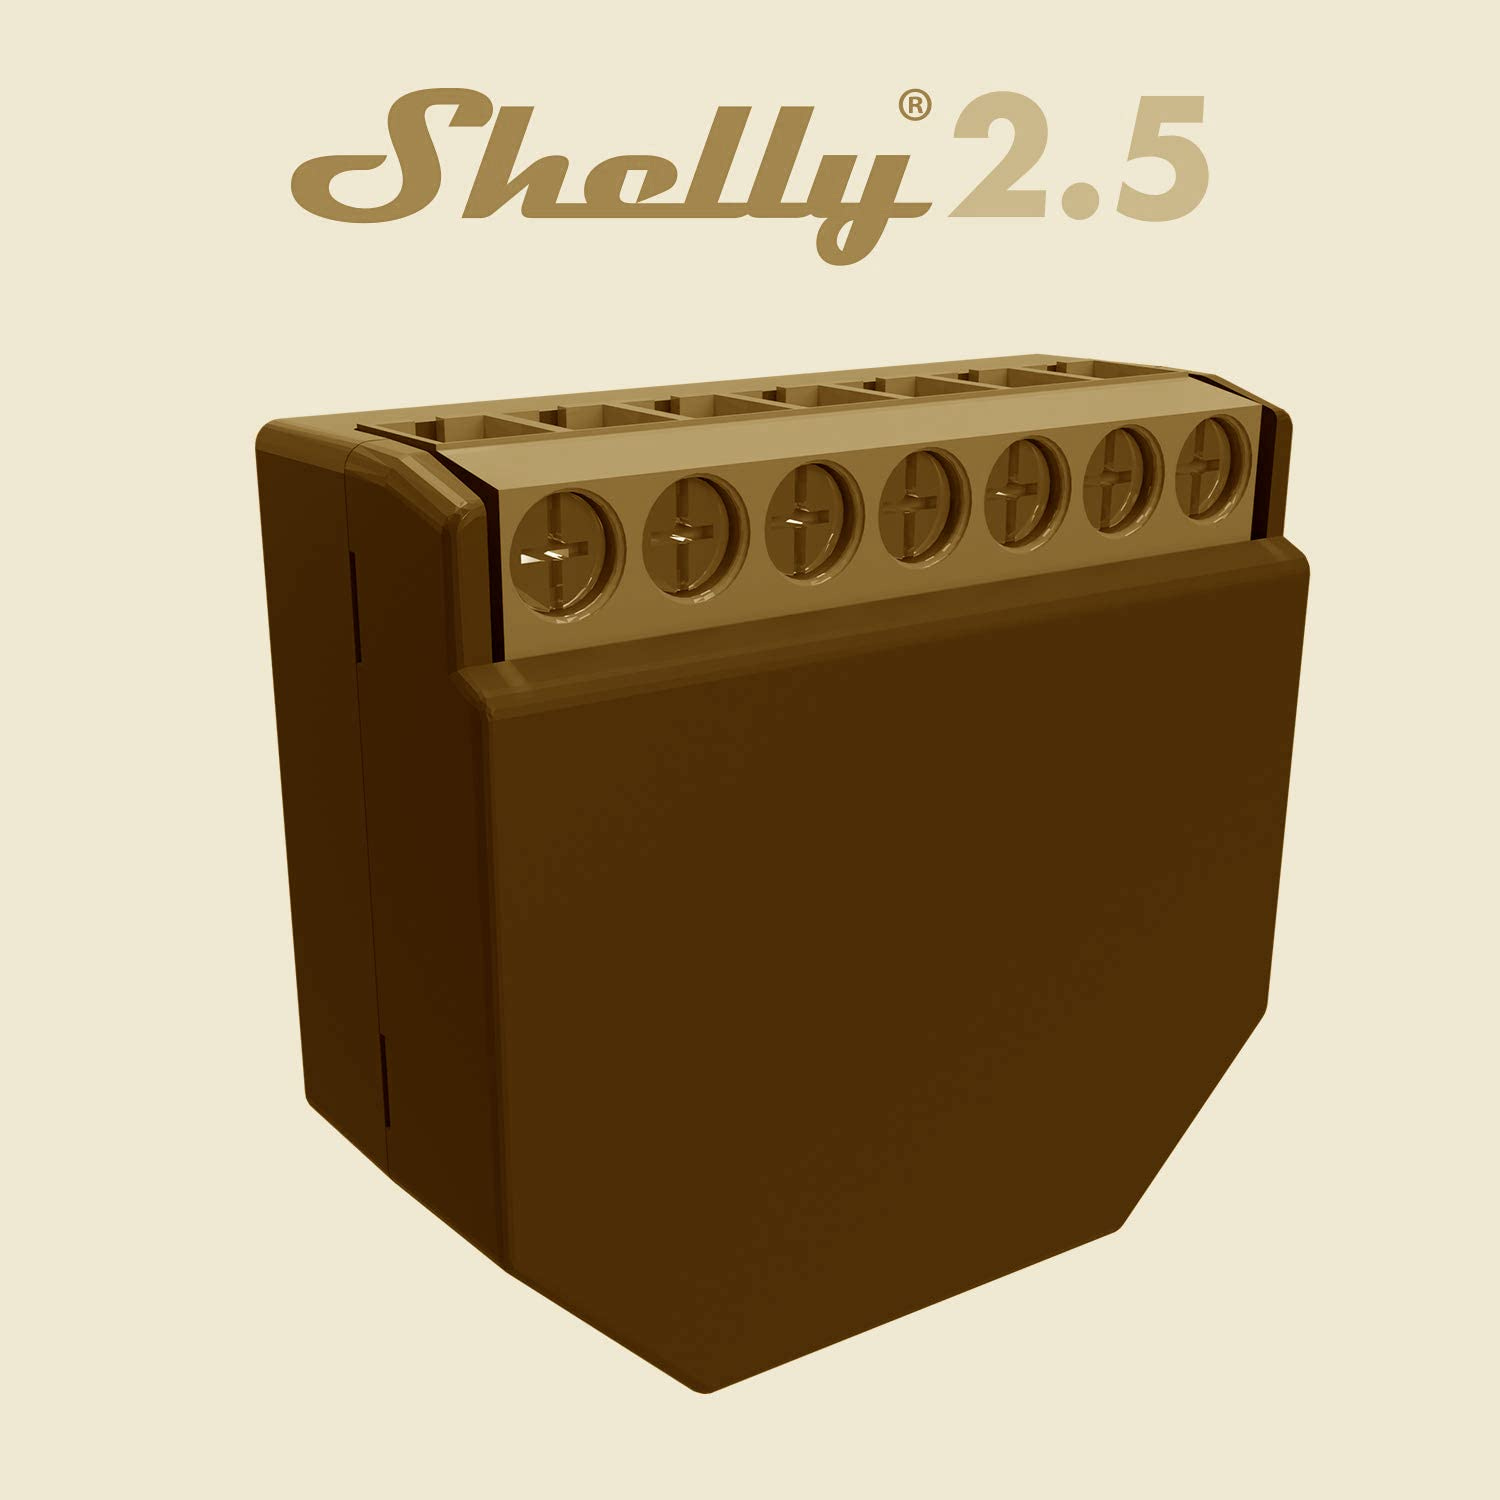 Shelly 2.5  DIY My Smart Home